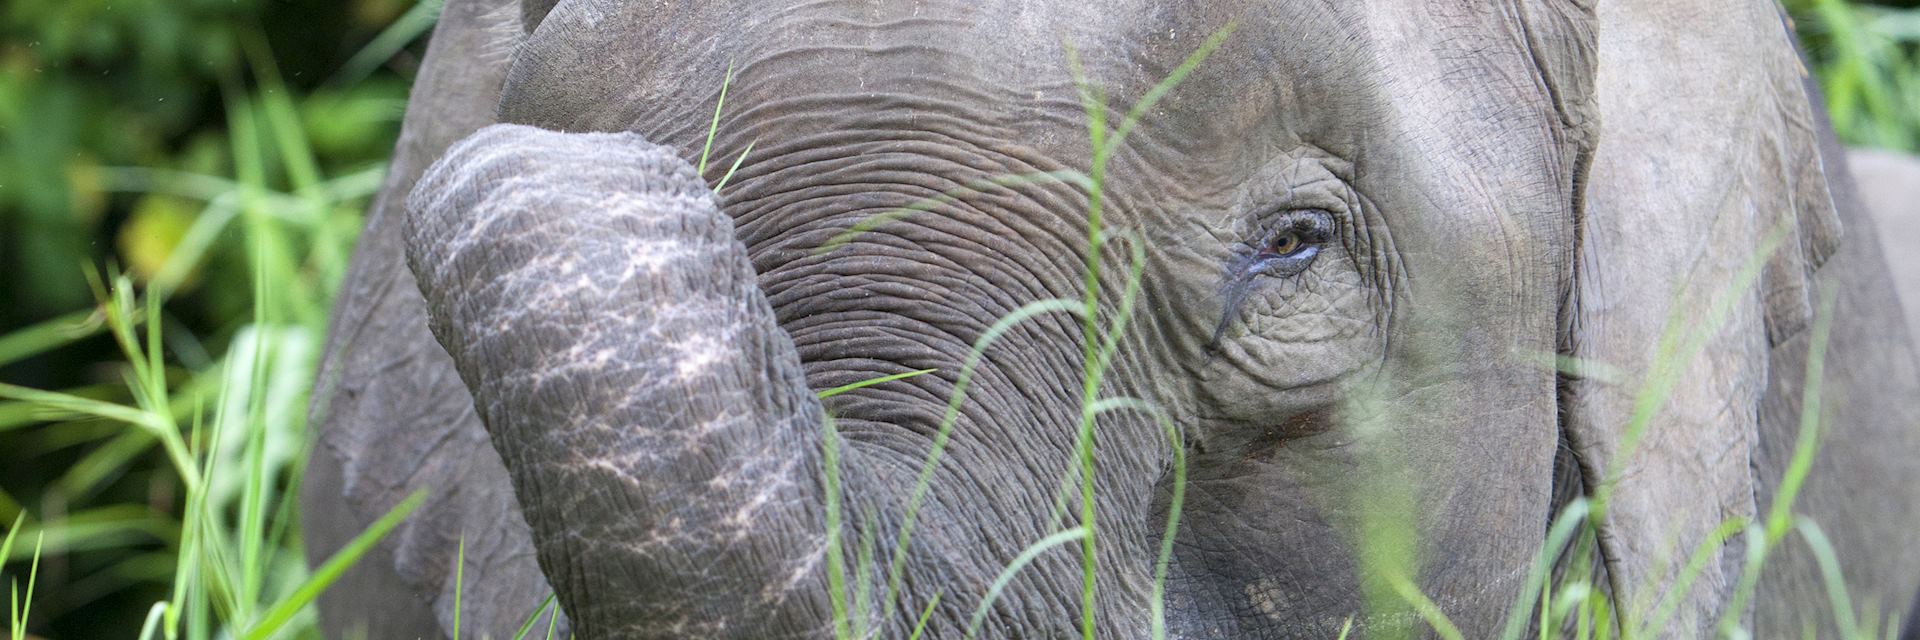 Pygmy elephant in Borneo